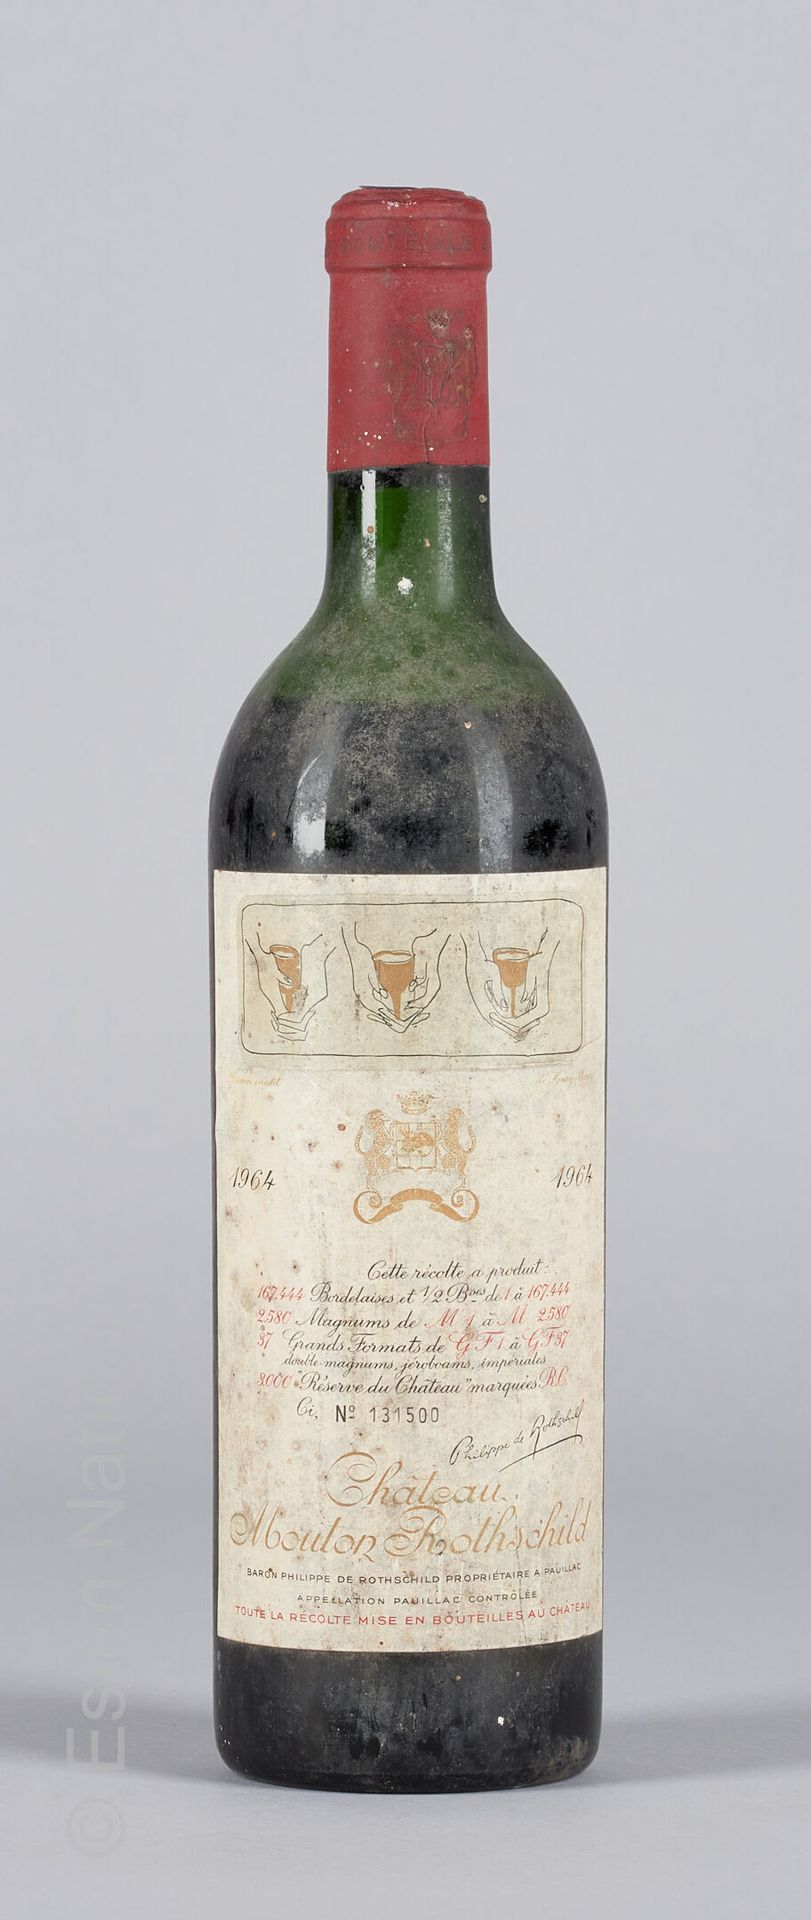 BORDEAUX 木桐酒庄1964年波亚克一级酒庄葡萄酒1瓶

(N. Me, E. A, m, s)